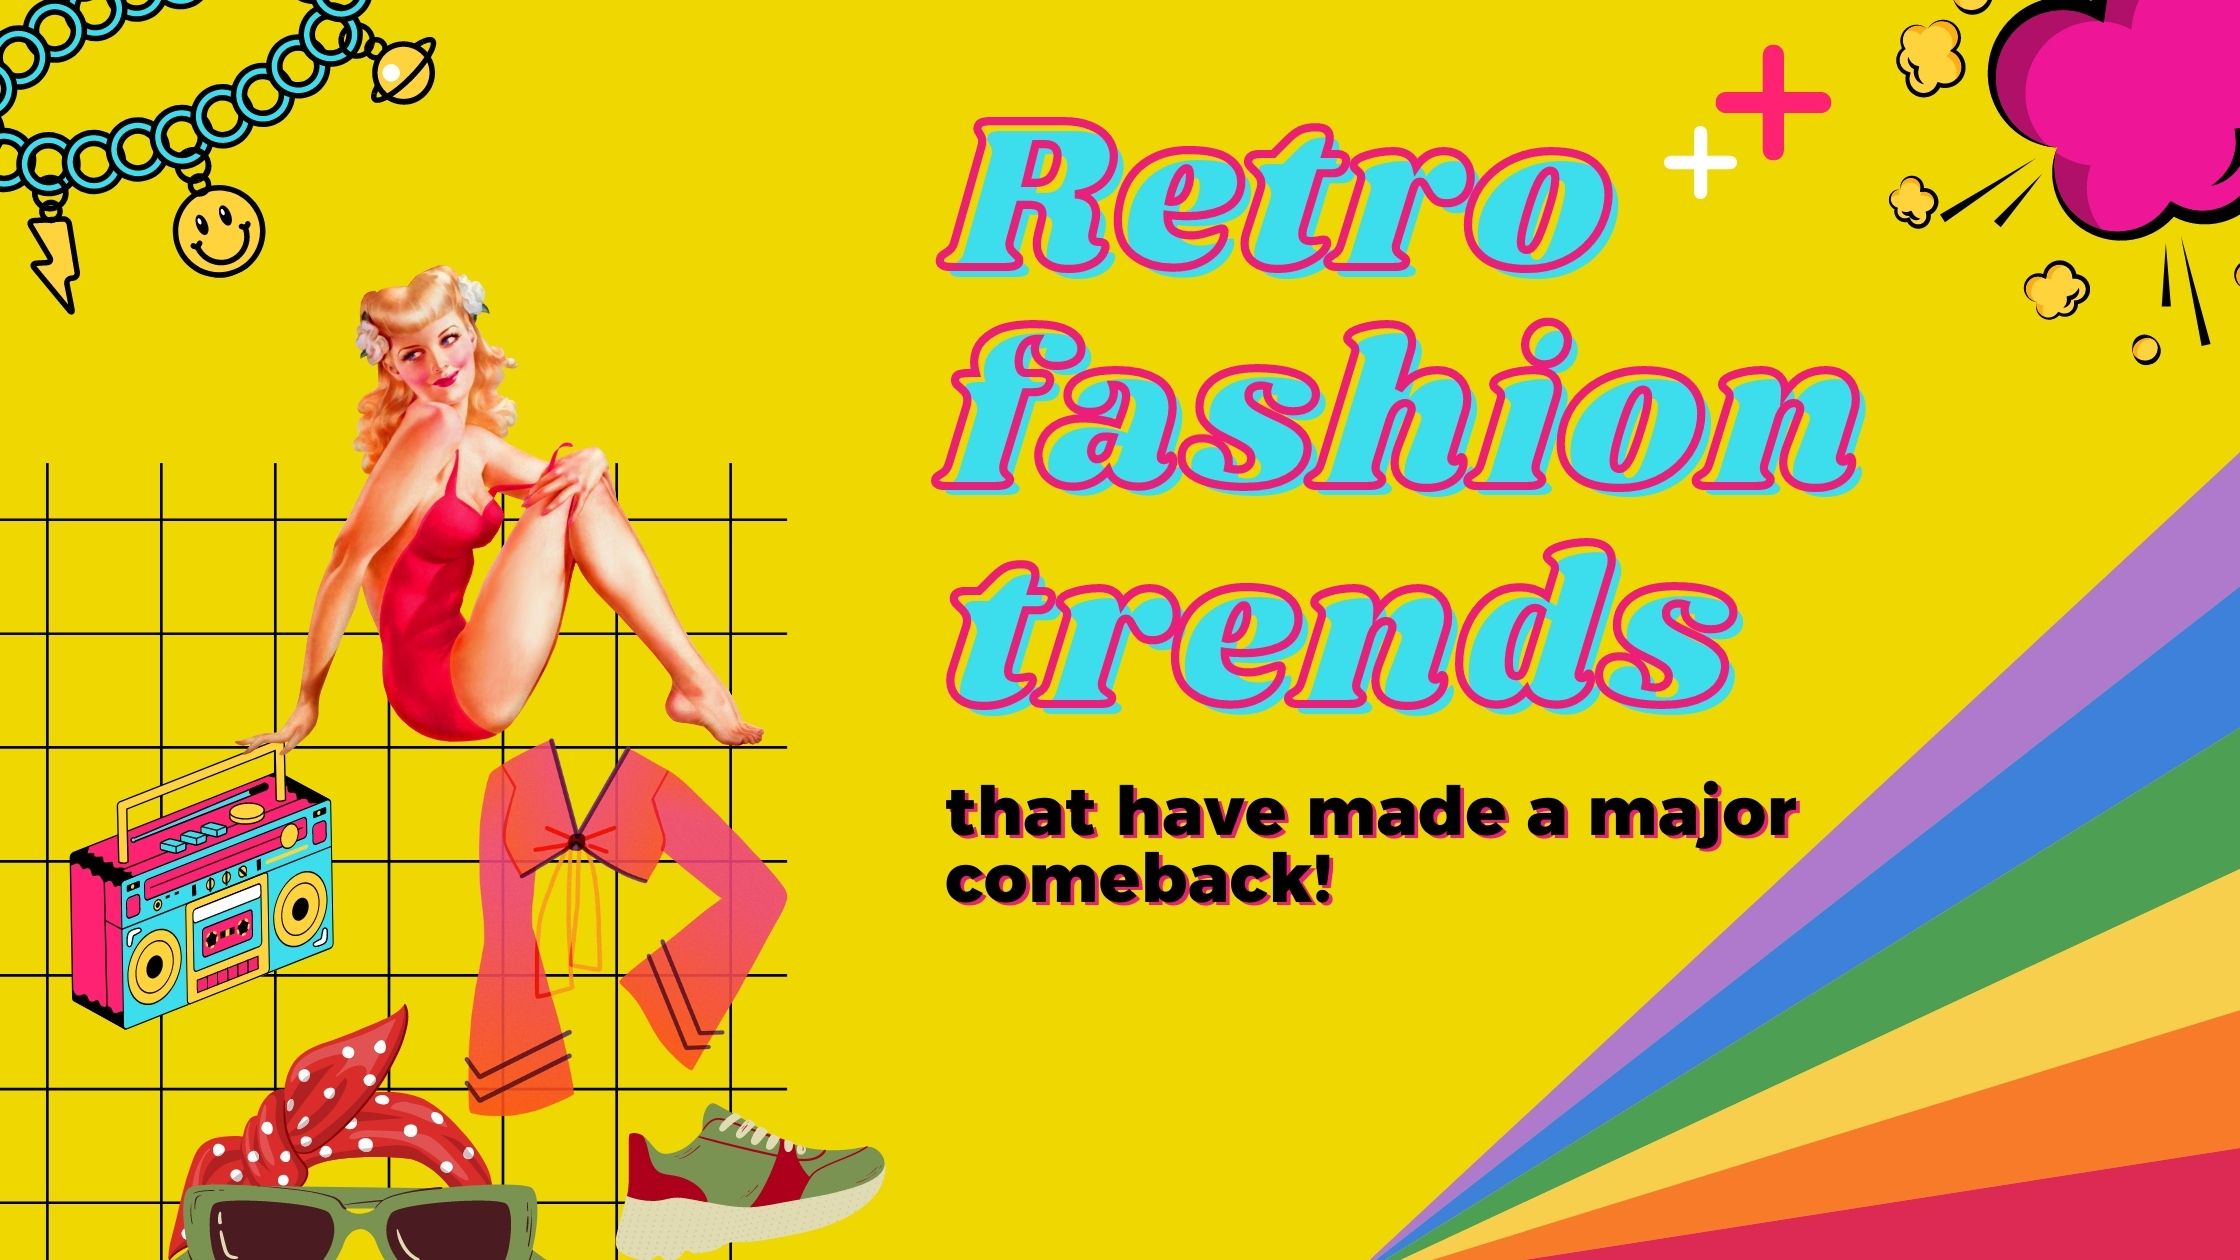 Retro fashion trends that have made a major comeback!